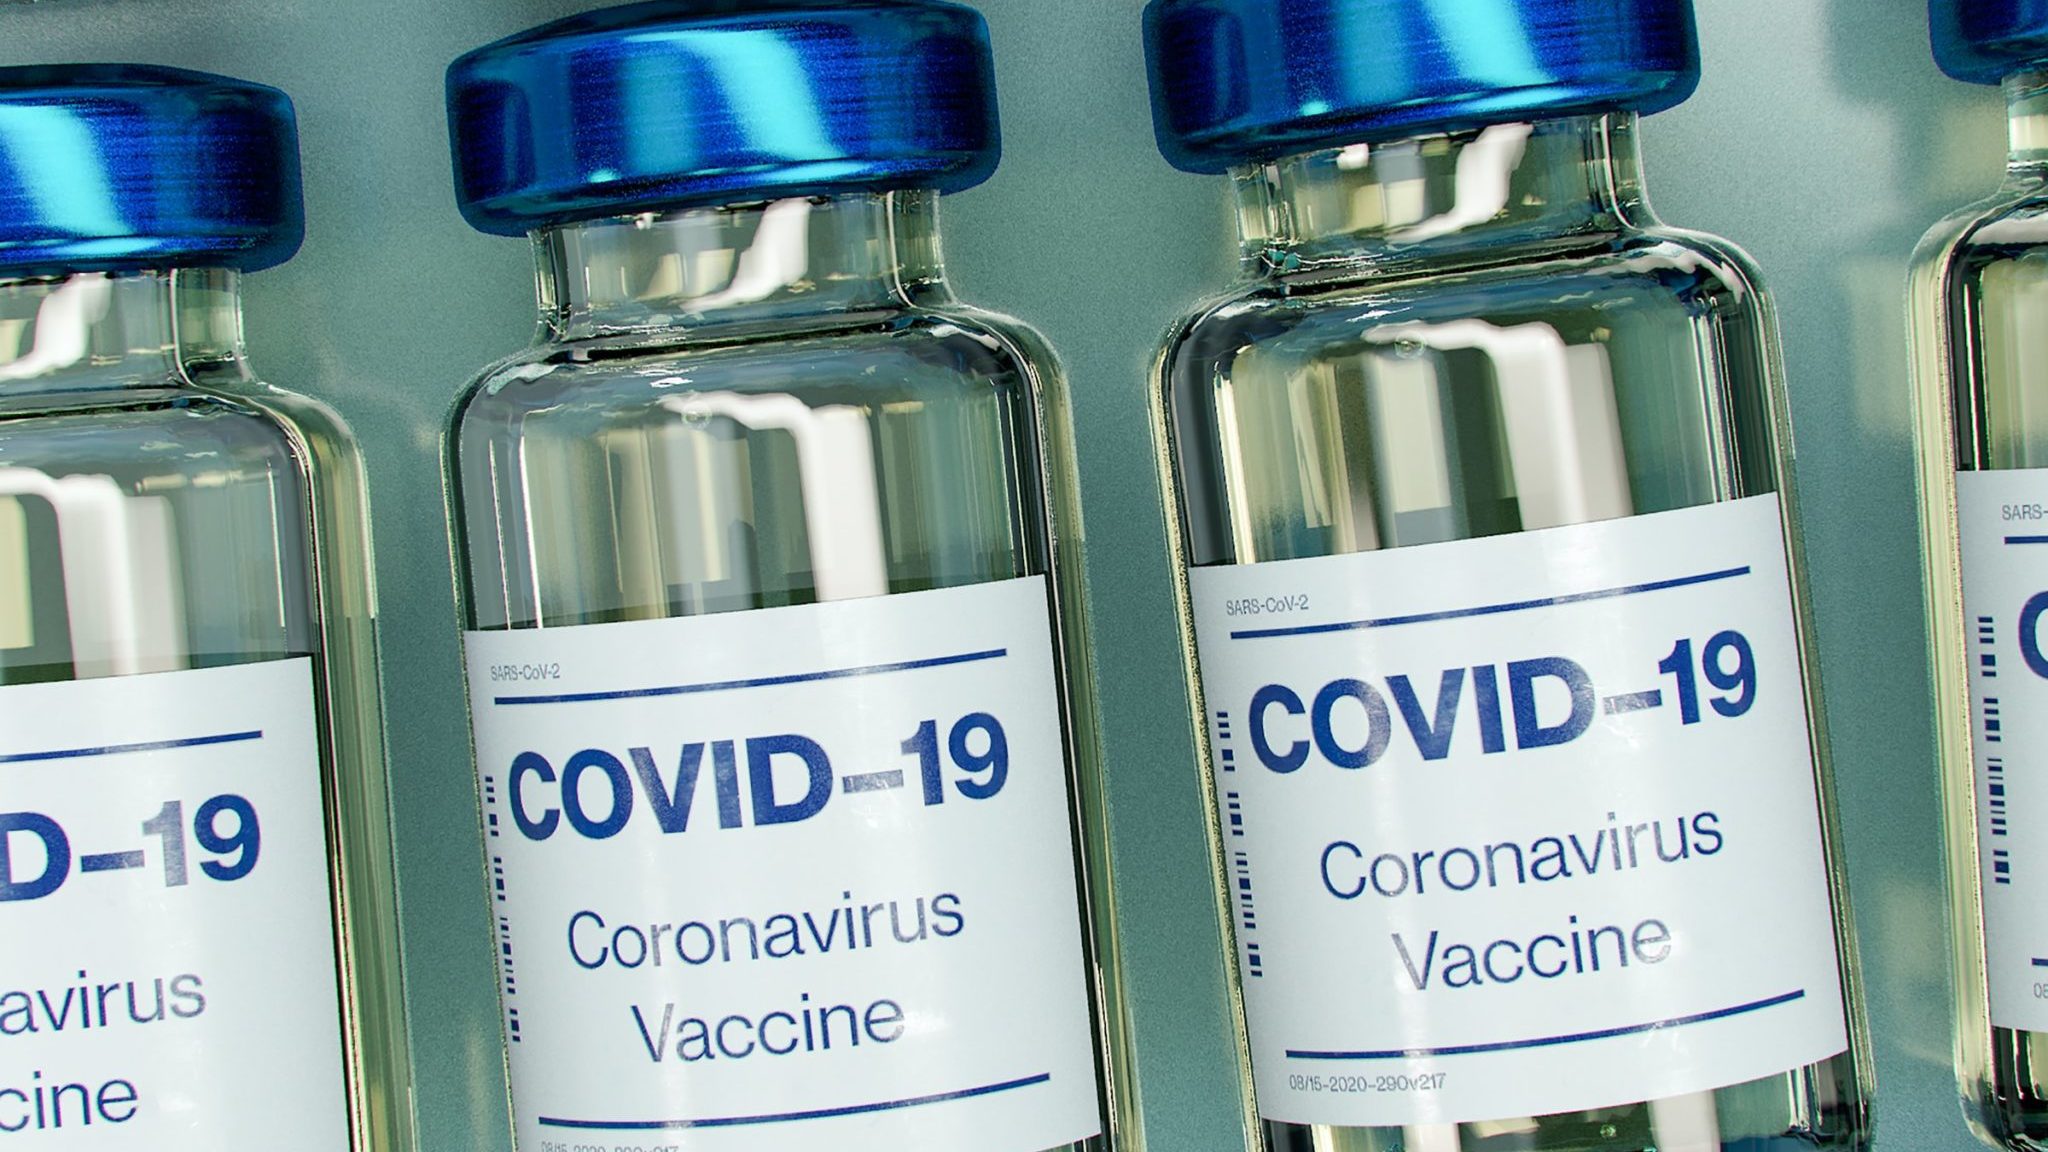 Can the SA Government make the Covid Vaccine compulsory?